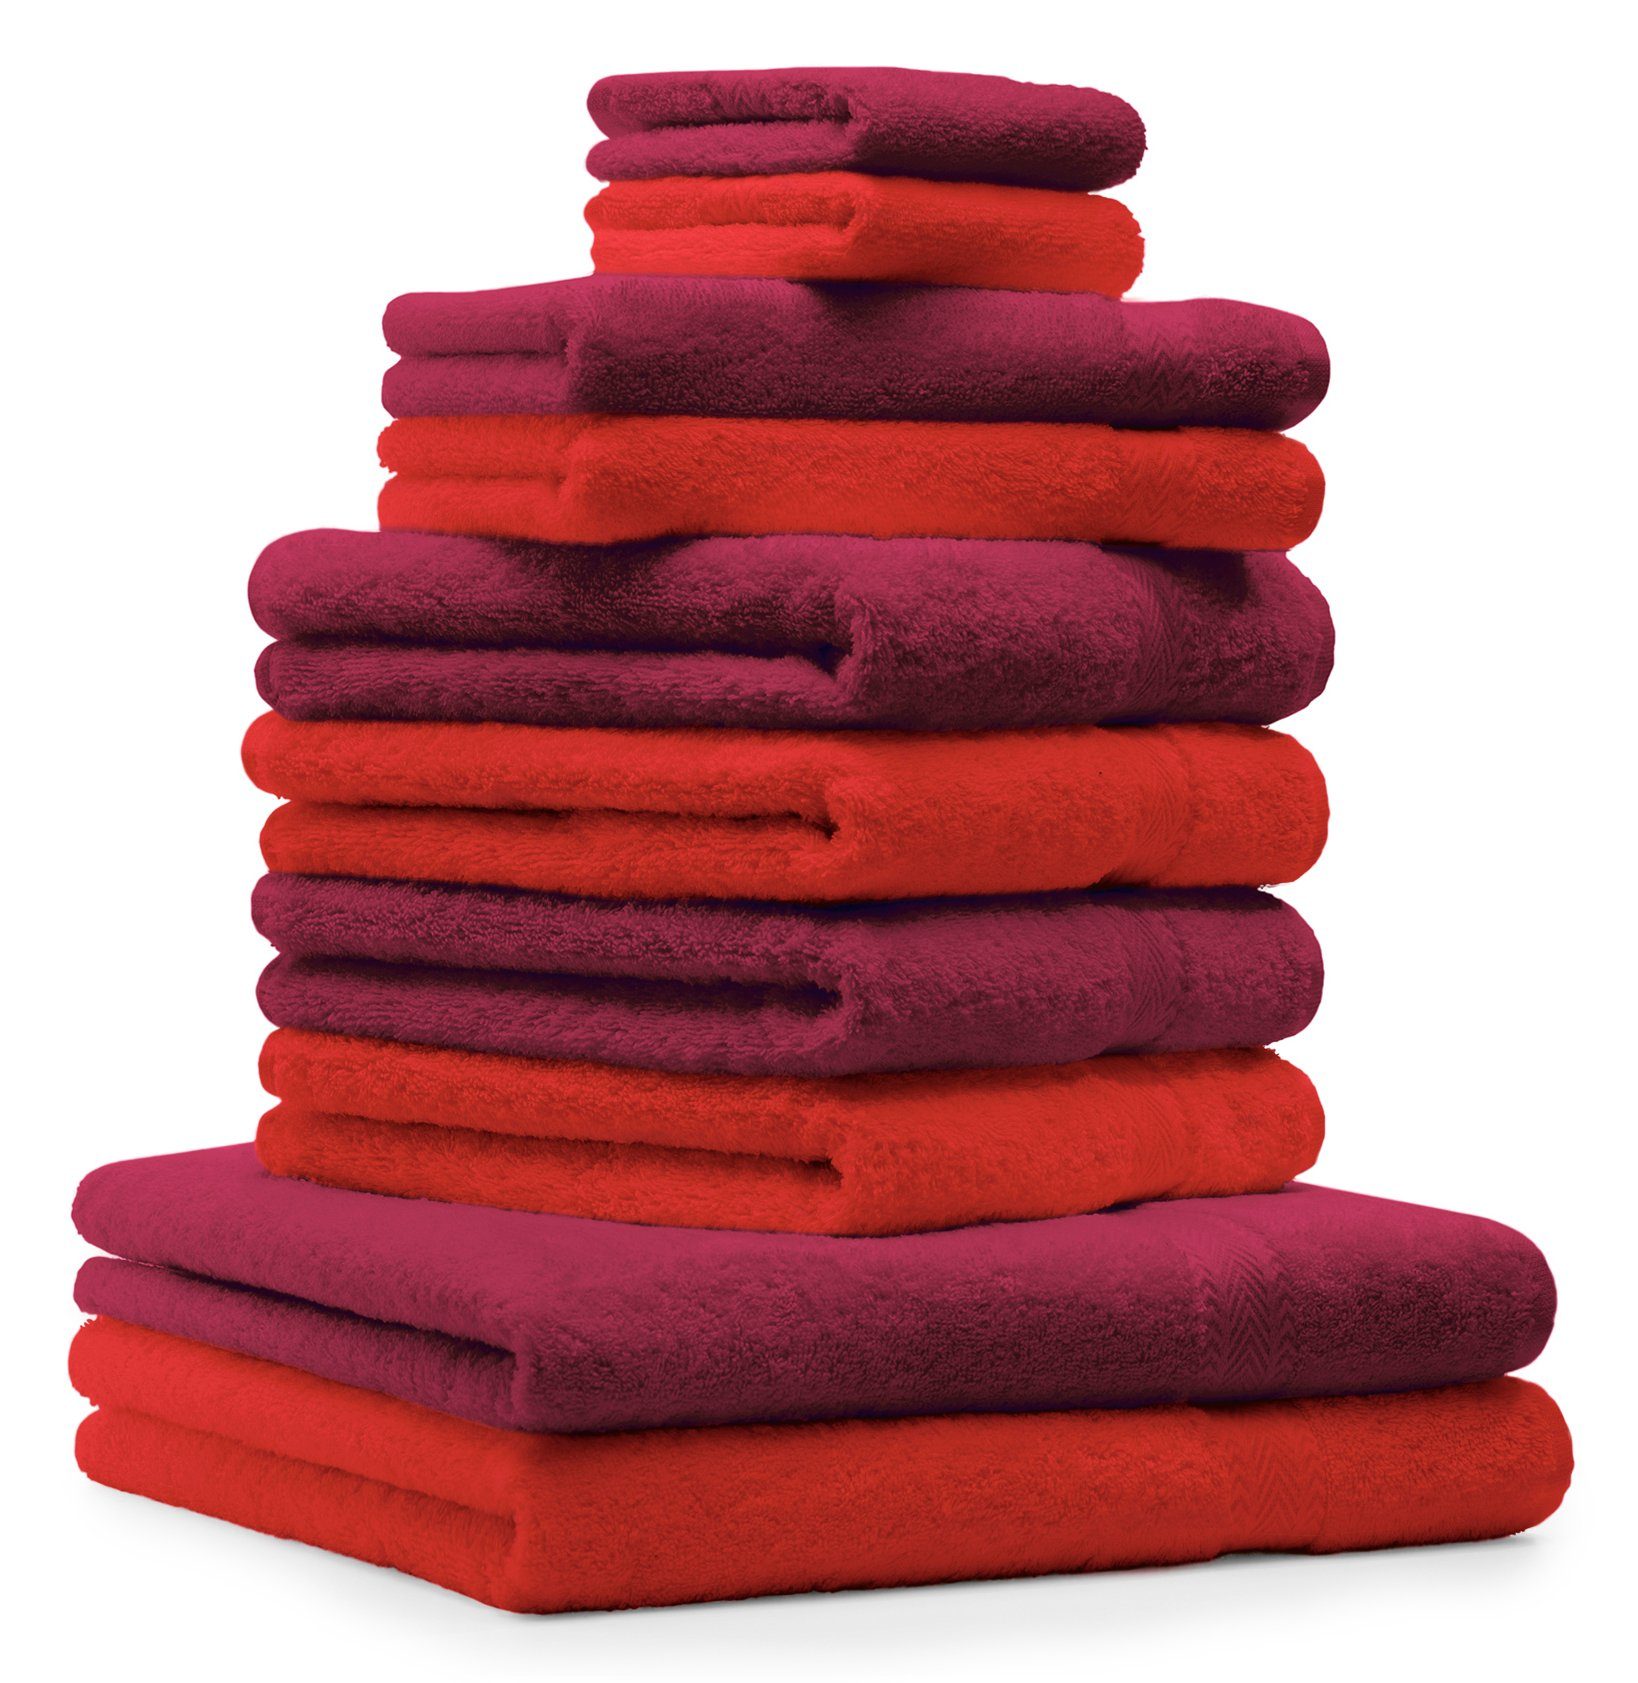 Betz Handtuch Set 10-TLG. Handtuch-Set CLASSIC 100% Baumwolle Farbe rot & dunkelrot, 100% Baumwolle | Handtuch-Sets